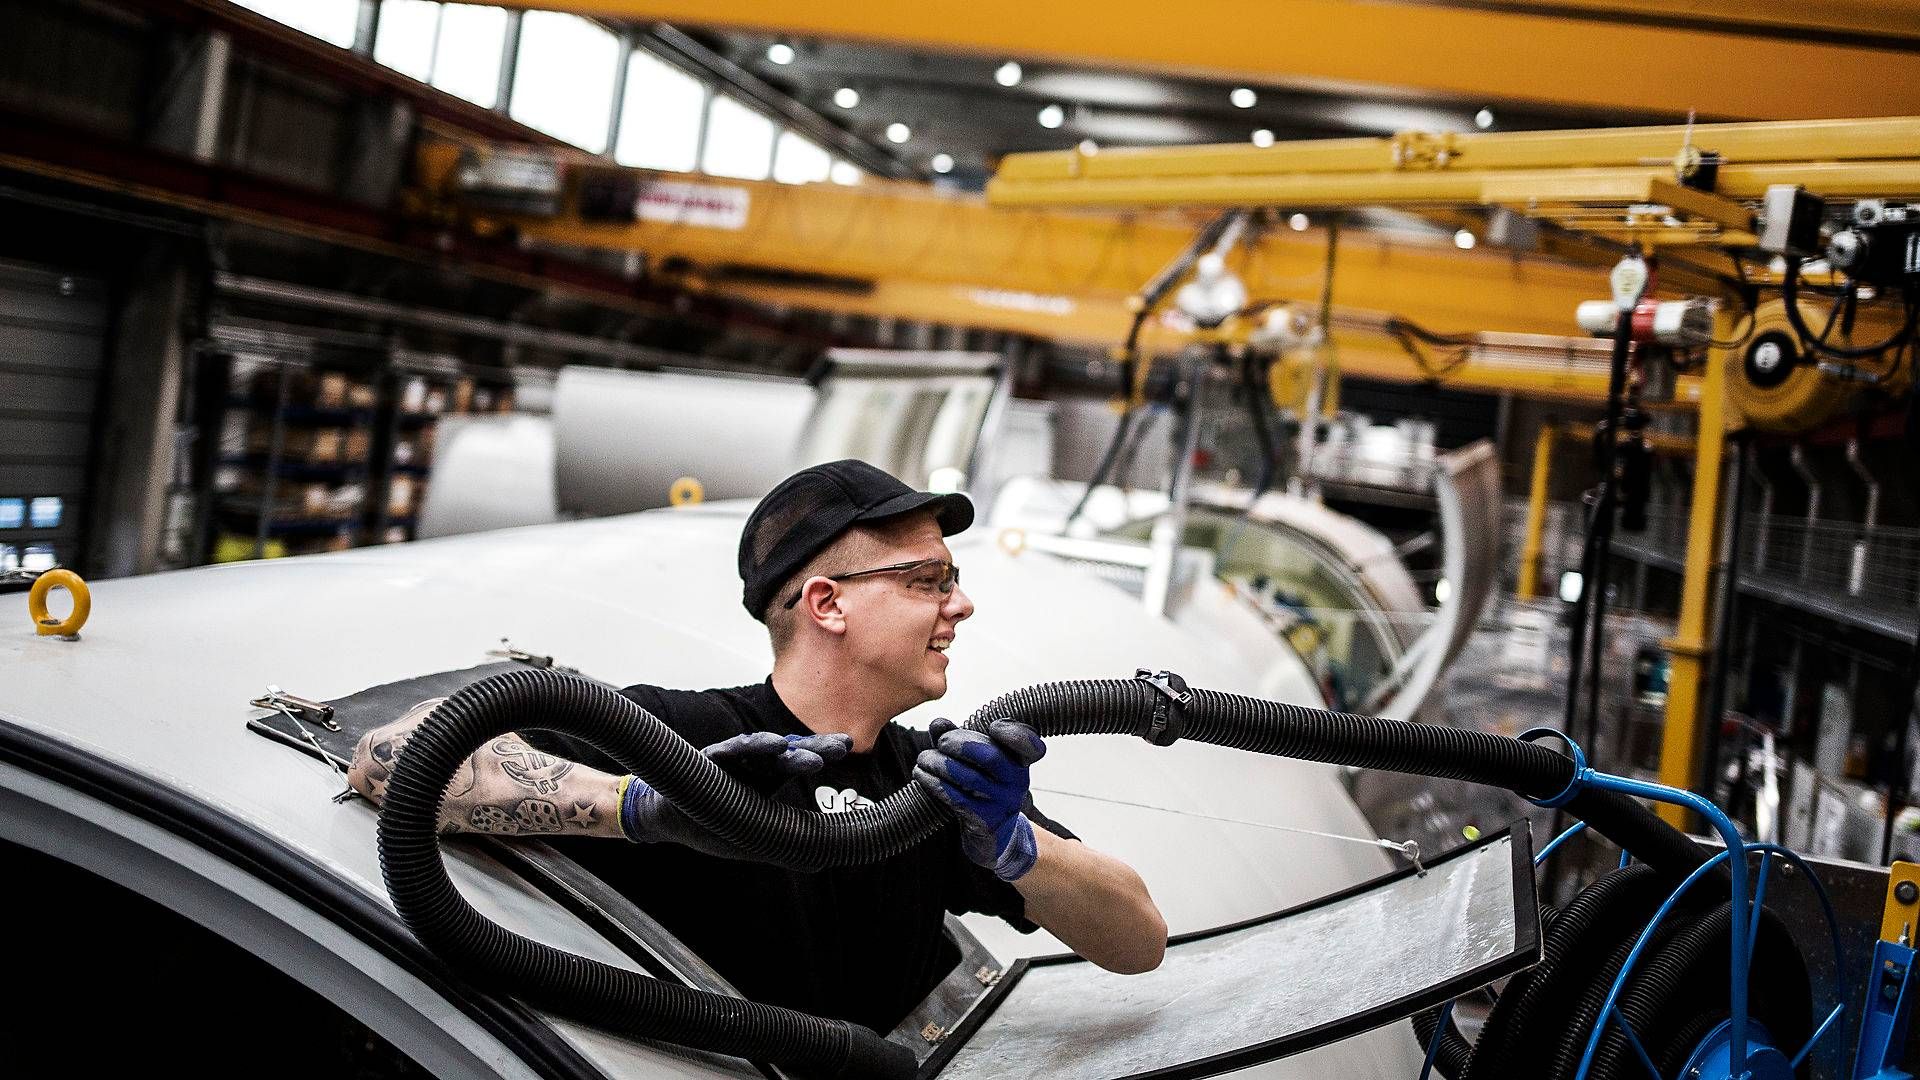 Dansk vindindustri trodser coronakrisen. De tilbageværende vindmøllefabrikker i landet holder produktionen i gang. | Foto: Simon Fals/Politiken/Ritzau Scanpix